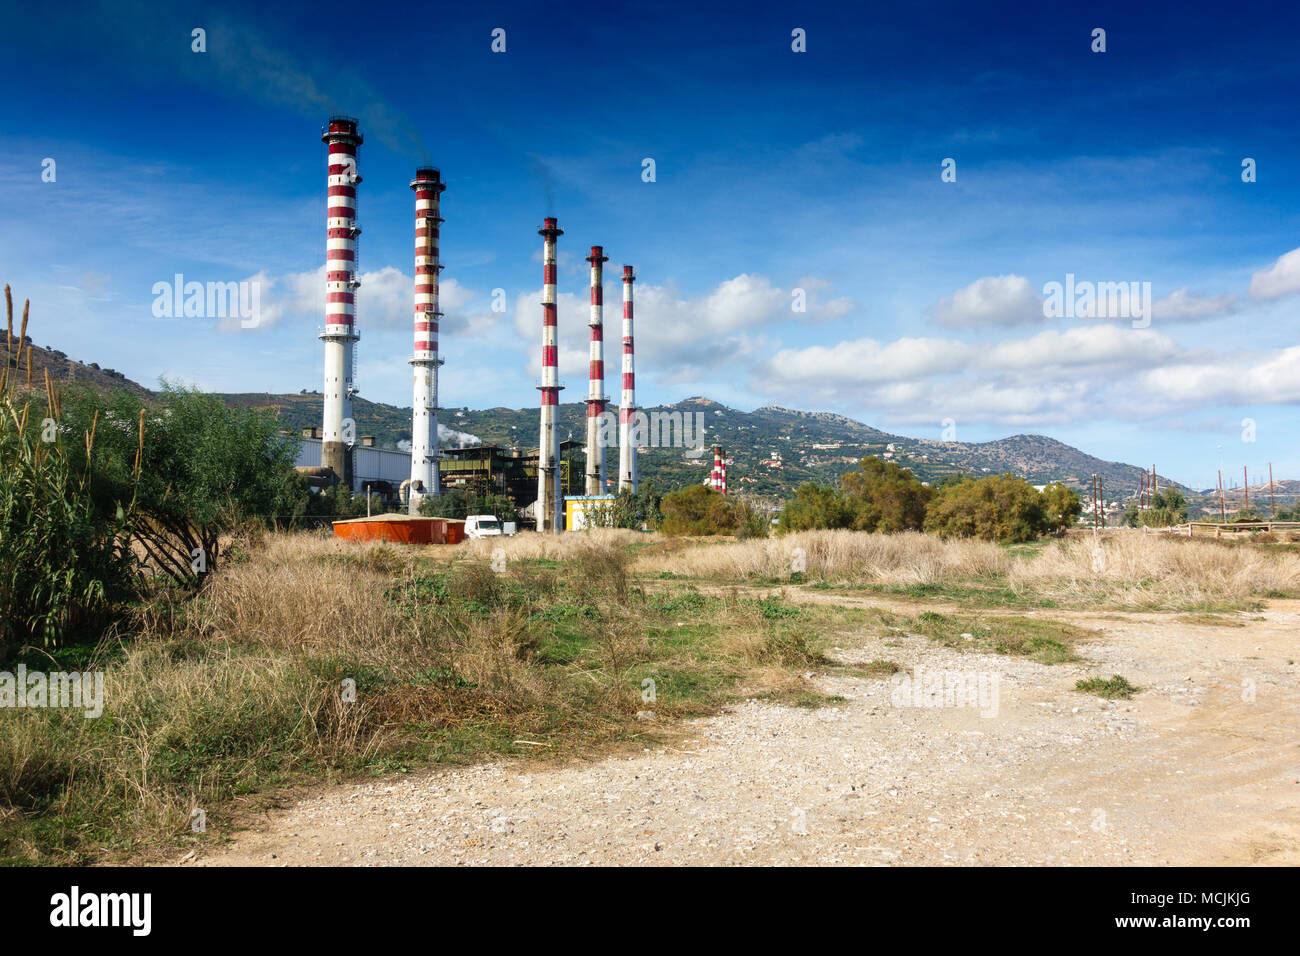 Vista del ducto de la planta petroquímica, Grecia Foto de stock